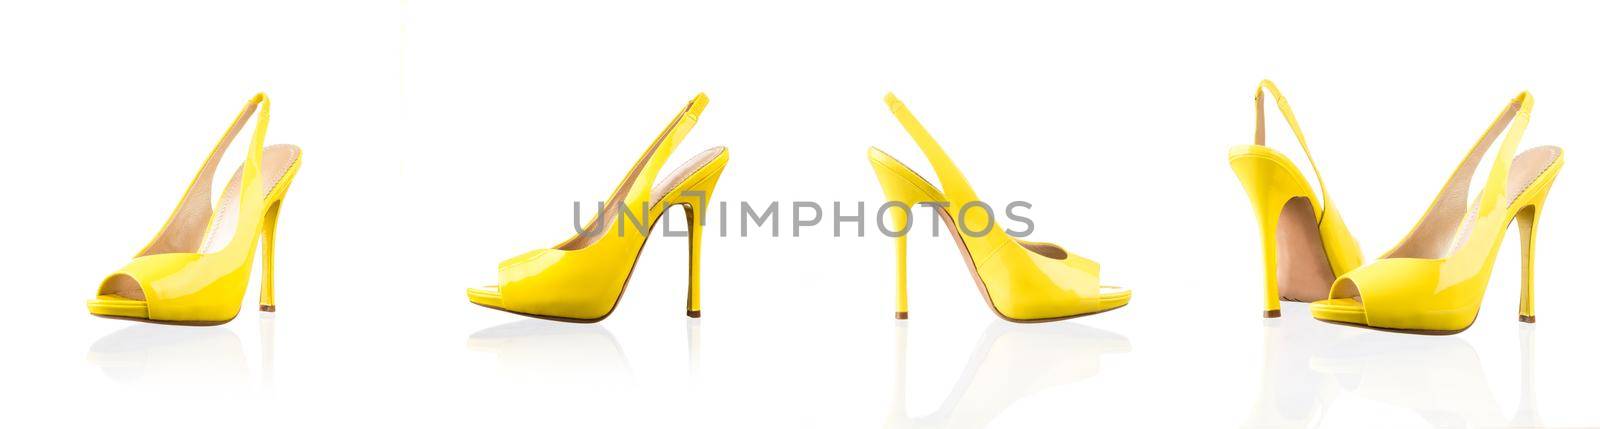 Yellow female shoes over white by nikitabuida